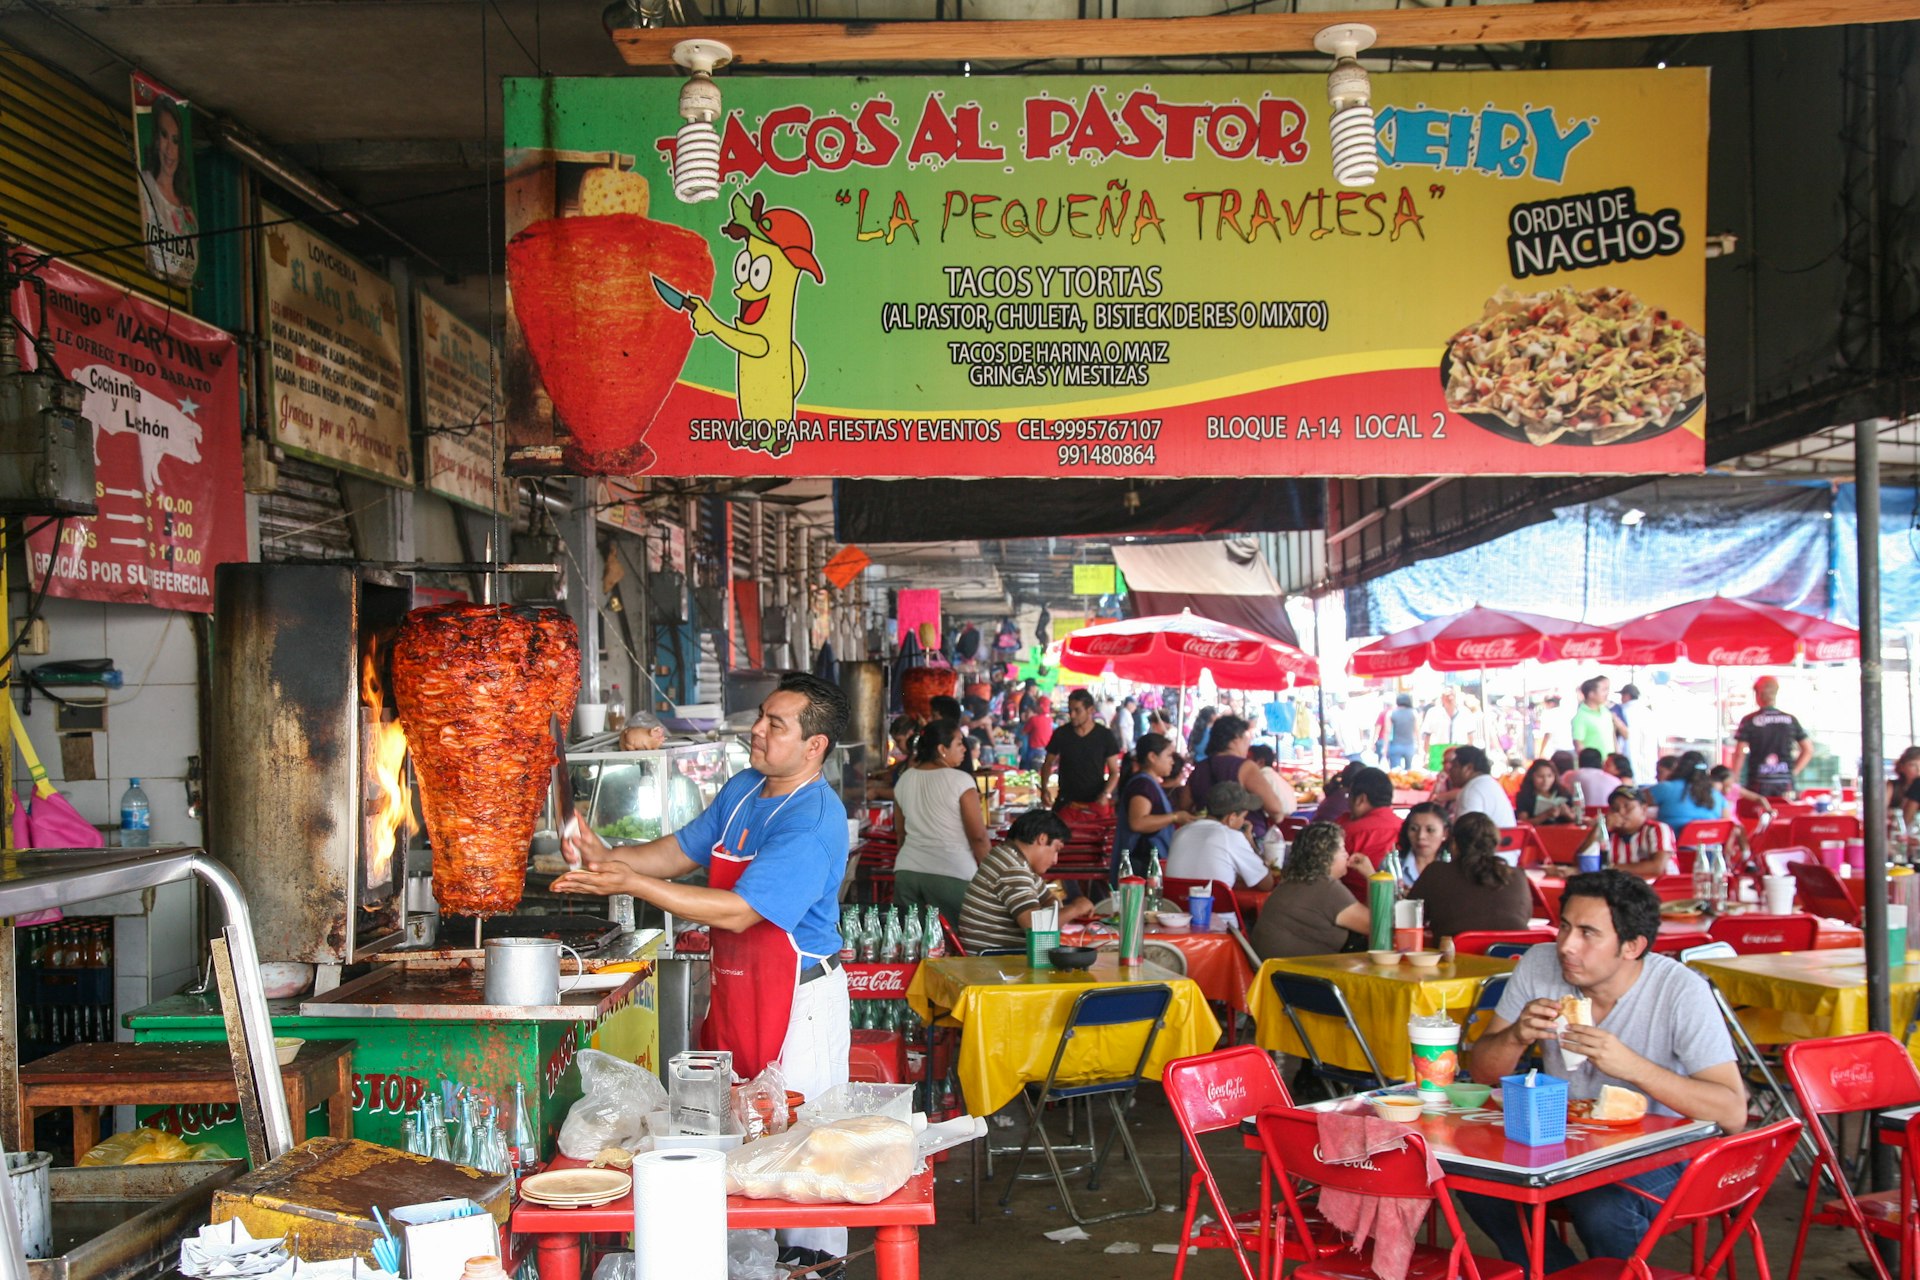 A man carves meat for tacos al pastor among crowded tables at the Mercado Municipal Lucas de Gálvez market in Mérida